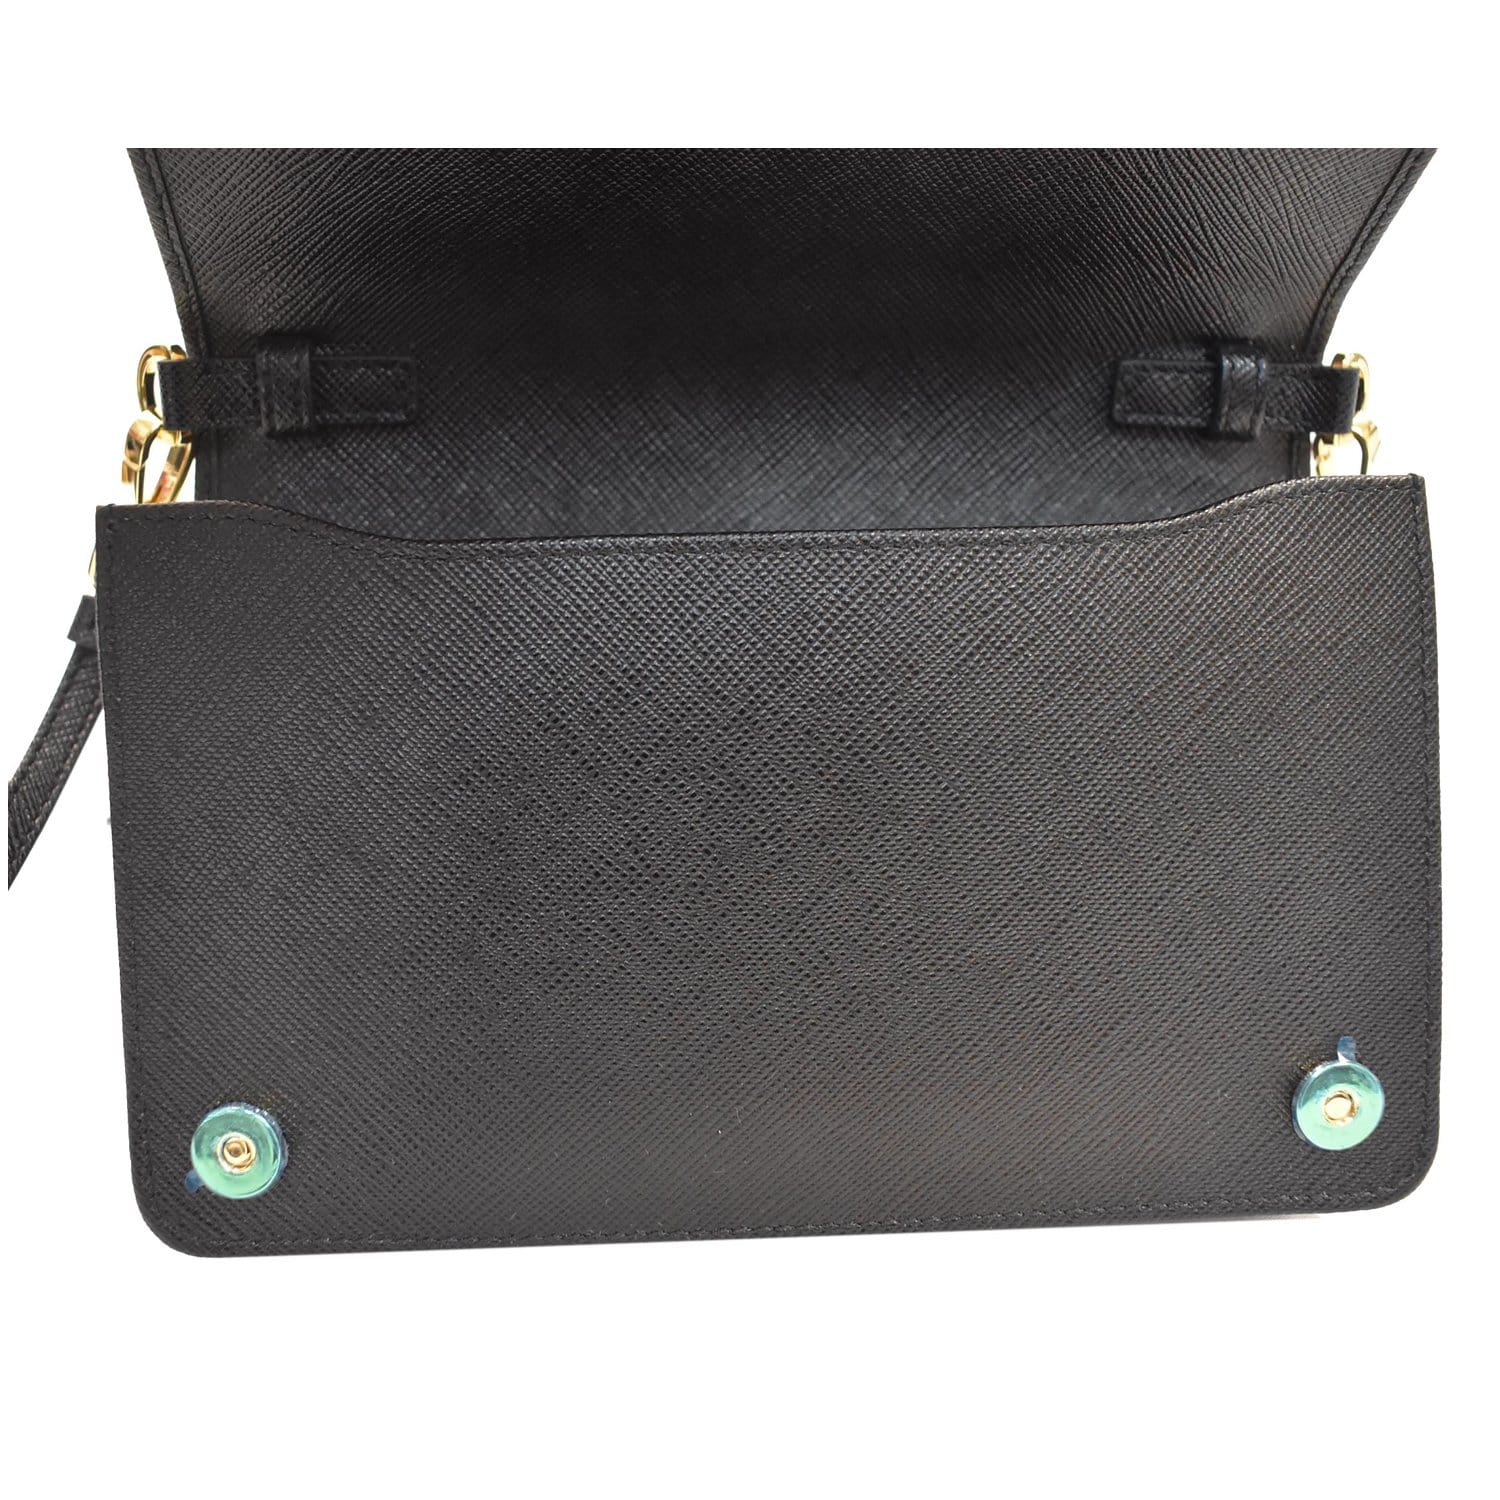 Prada Saffiano Leather Mini Envelope Bag - ShopStyle